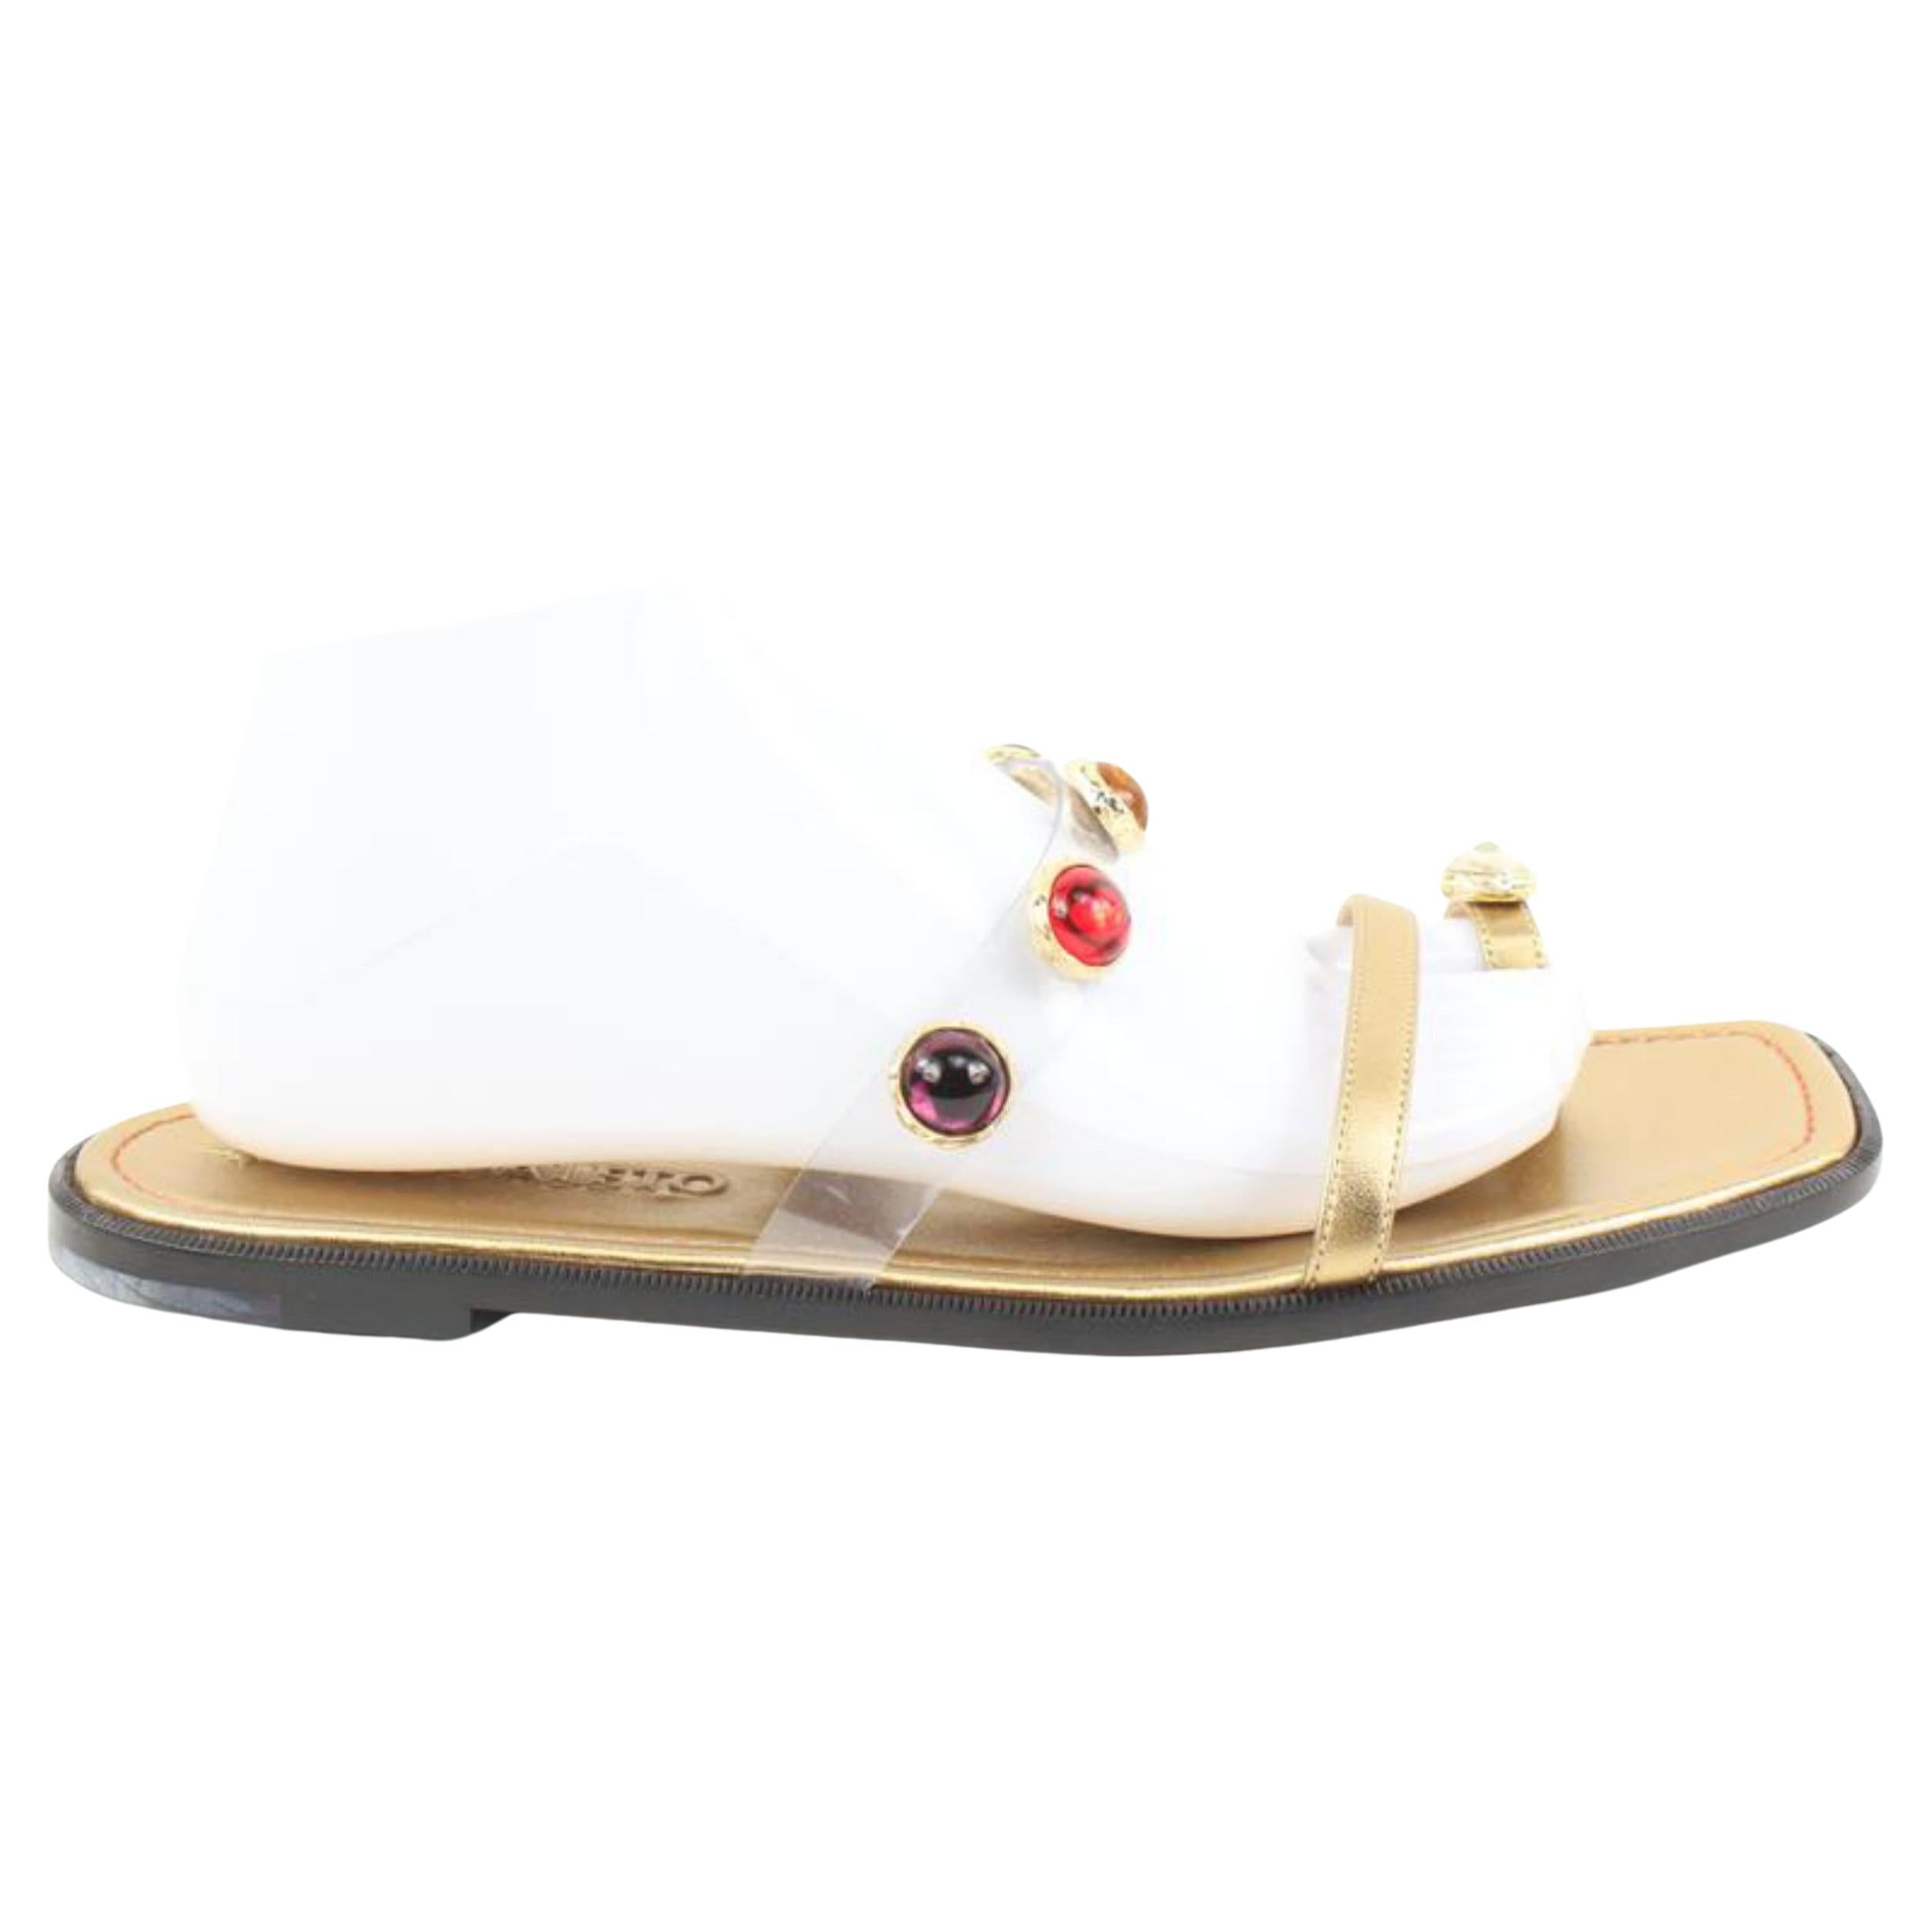 Nodaleto Size 39 Bulla Salem Flat Jeweled Sandals 35n37s For Sale